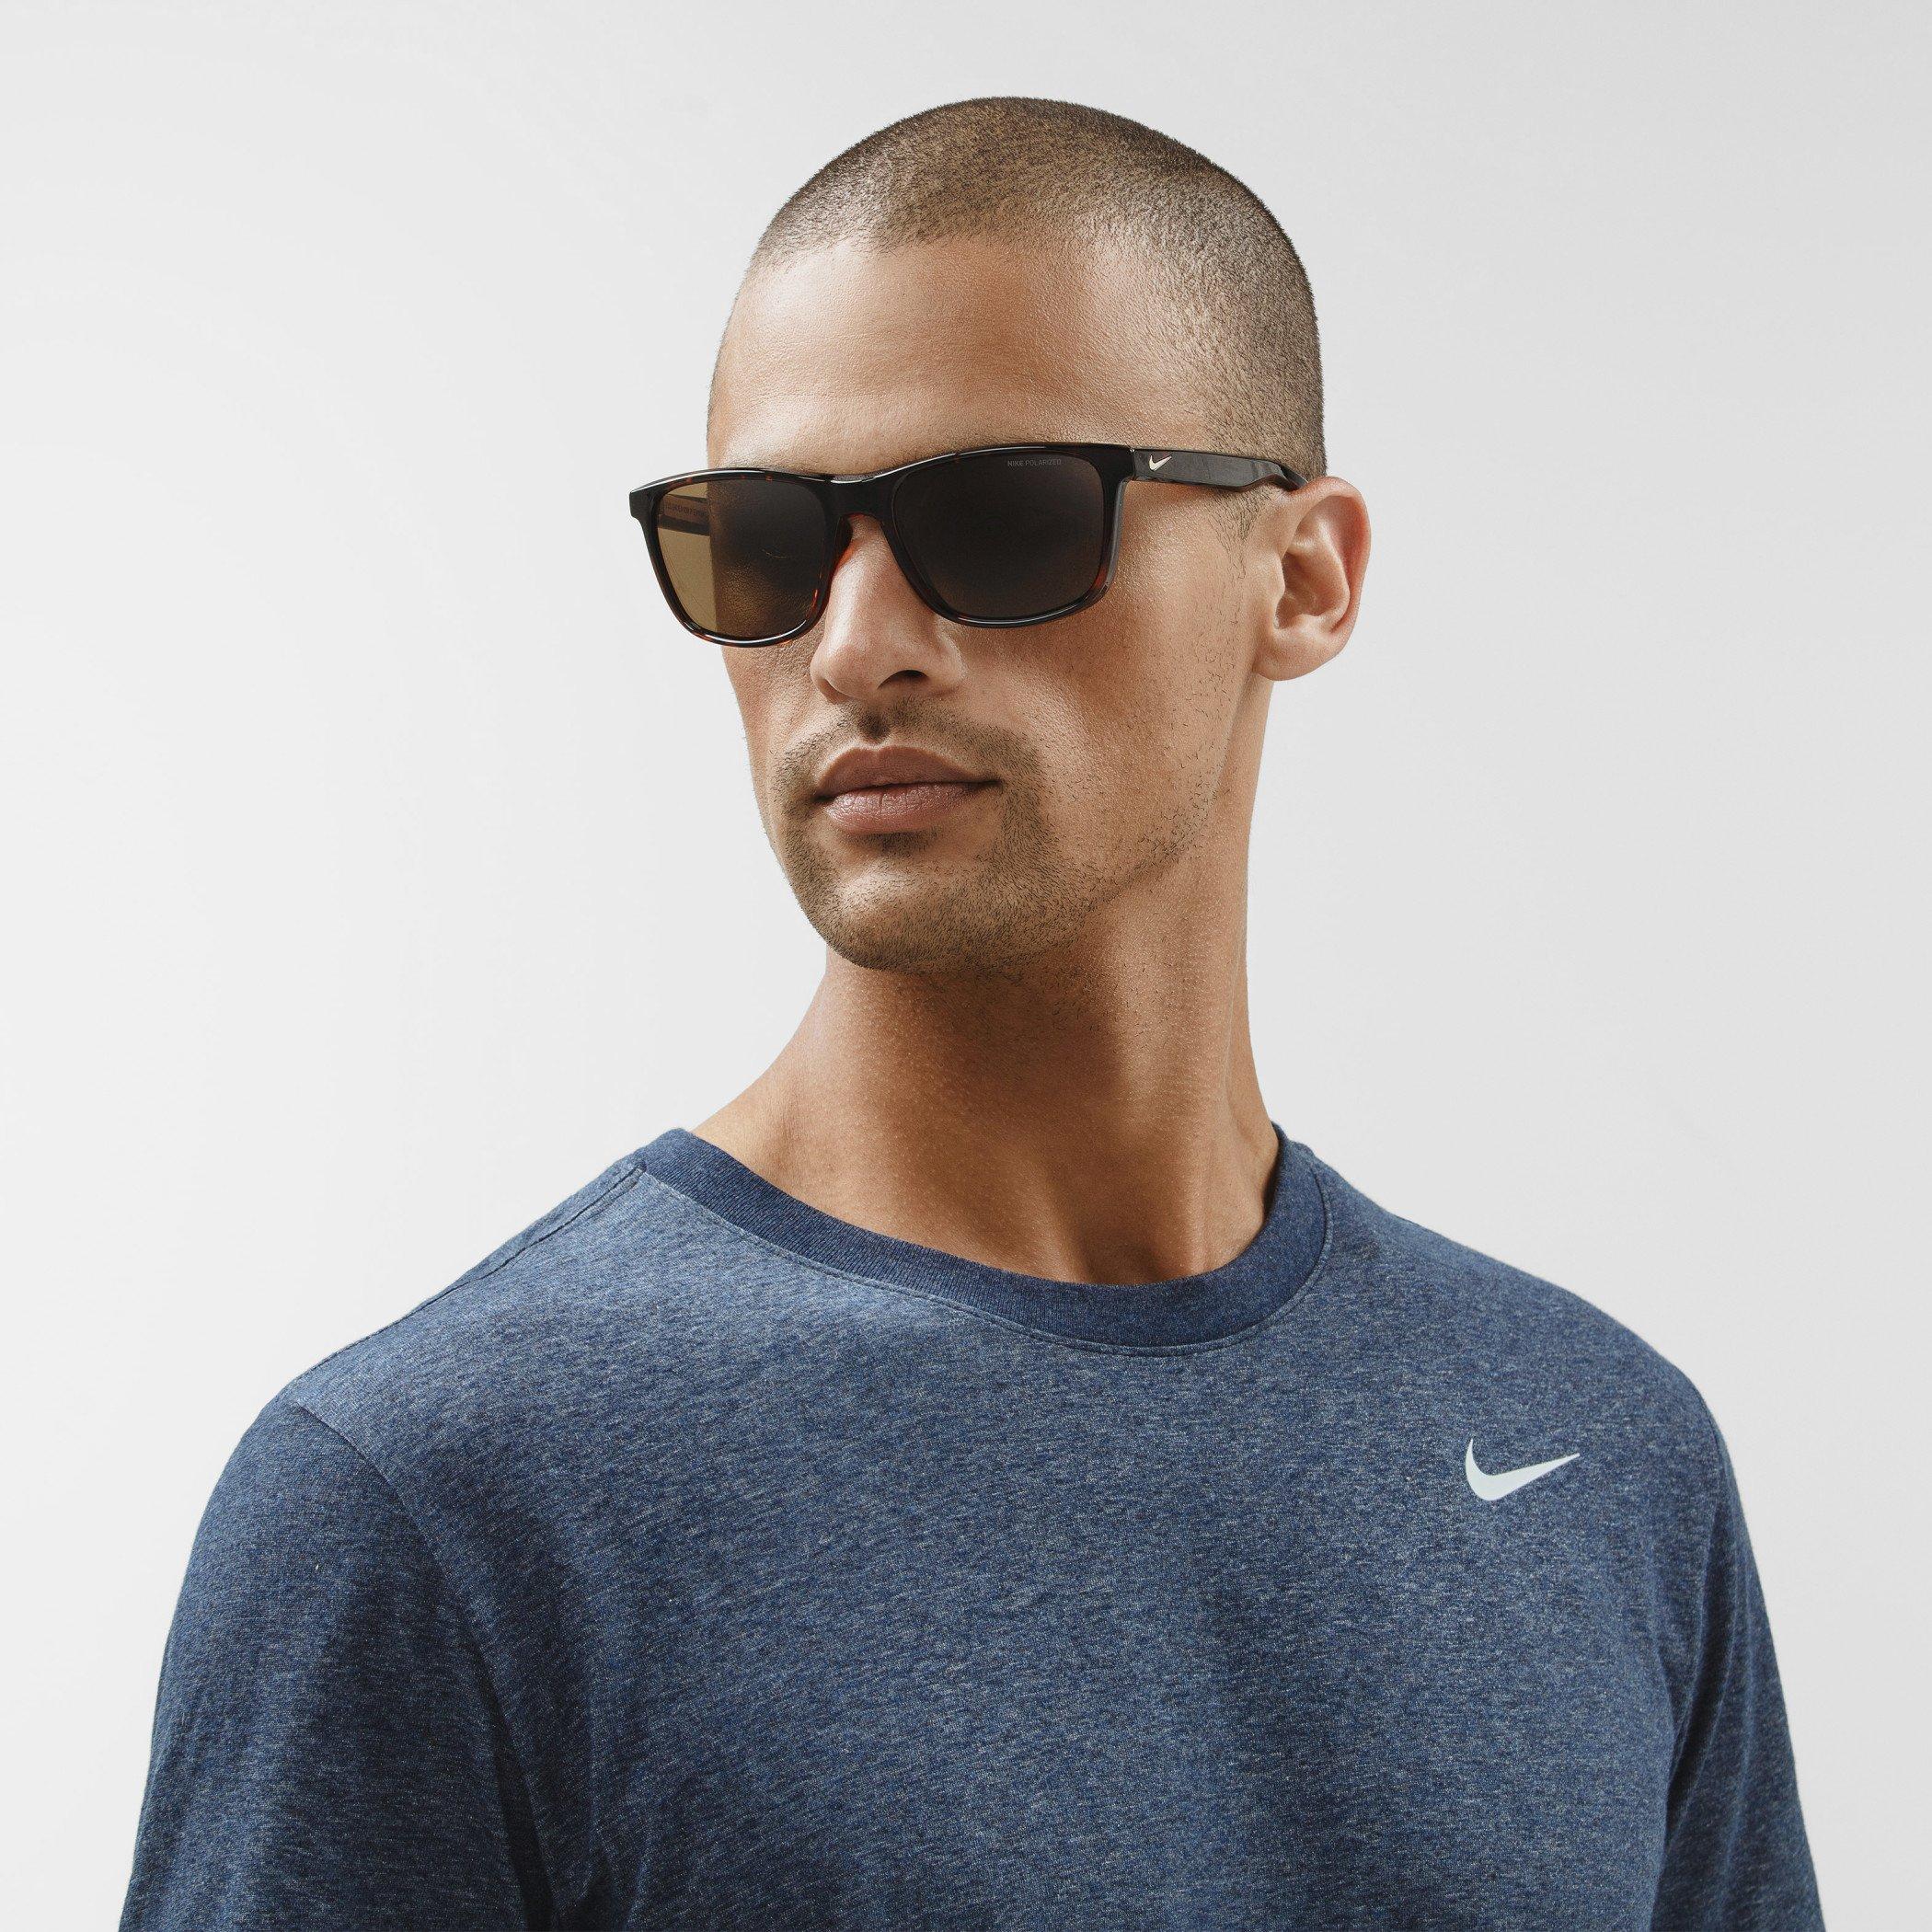 Nike Essential Endeavor Polarized Sunglasses.